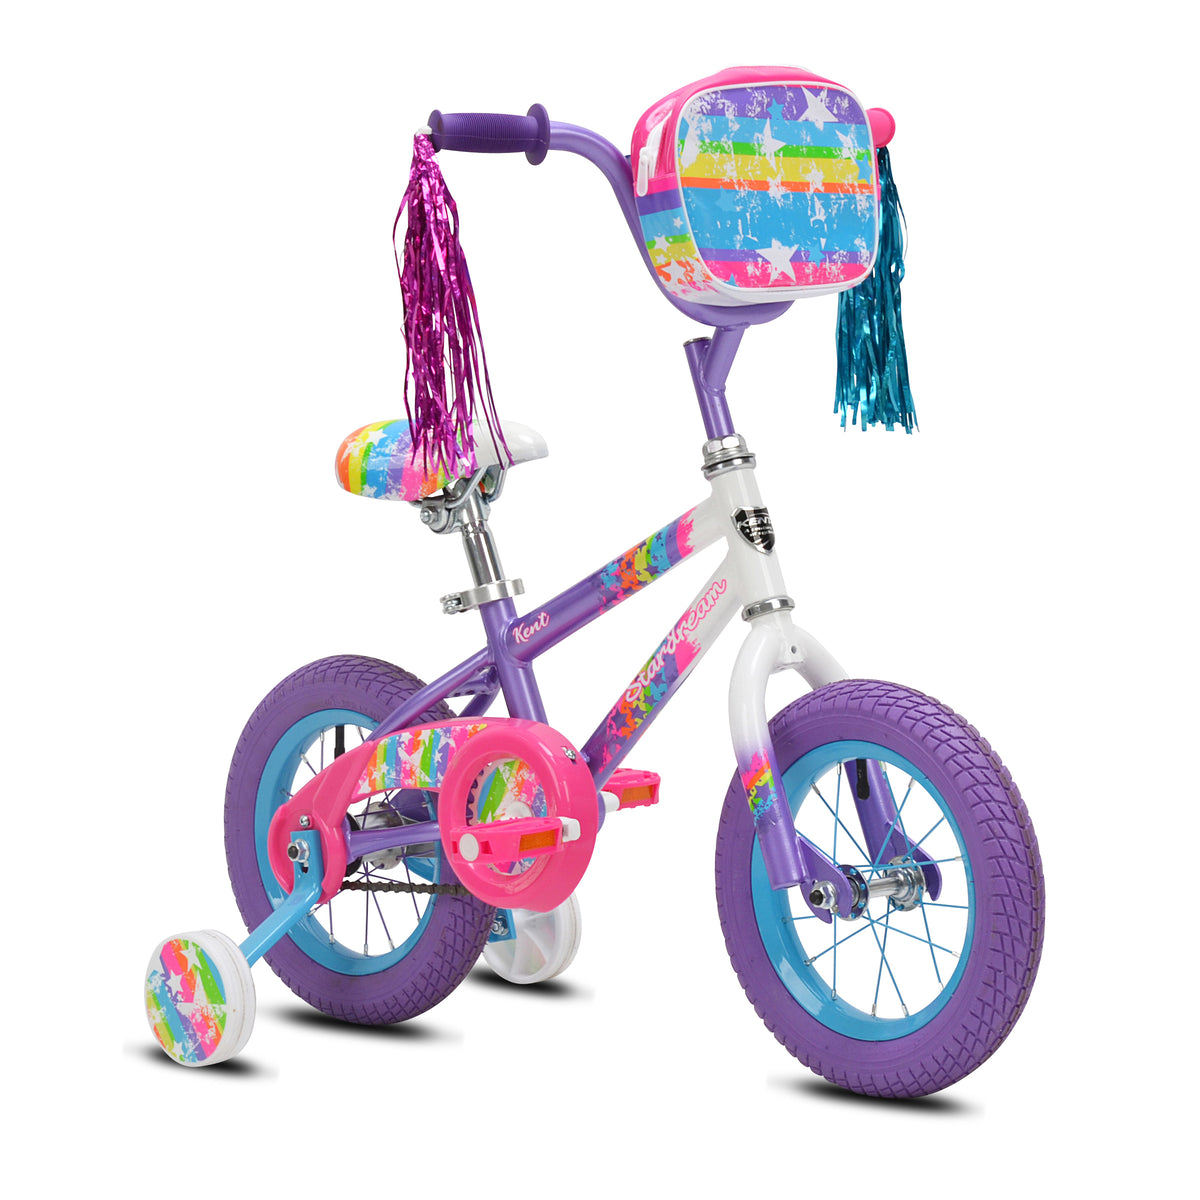 12" Kent Star Dream | Bike for Kids Ages 2-4